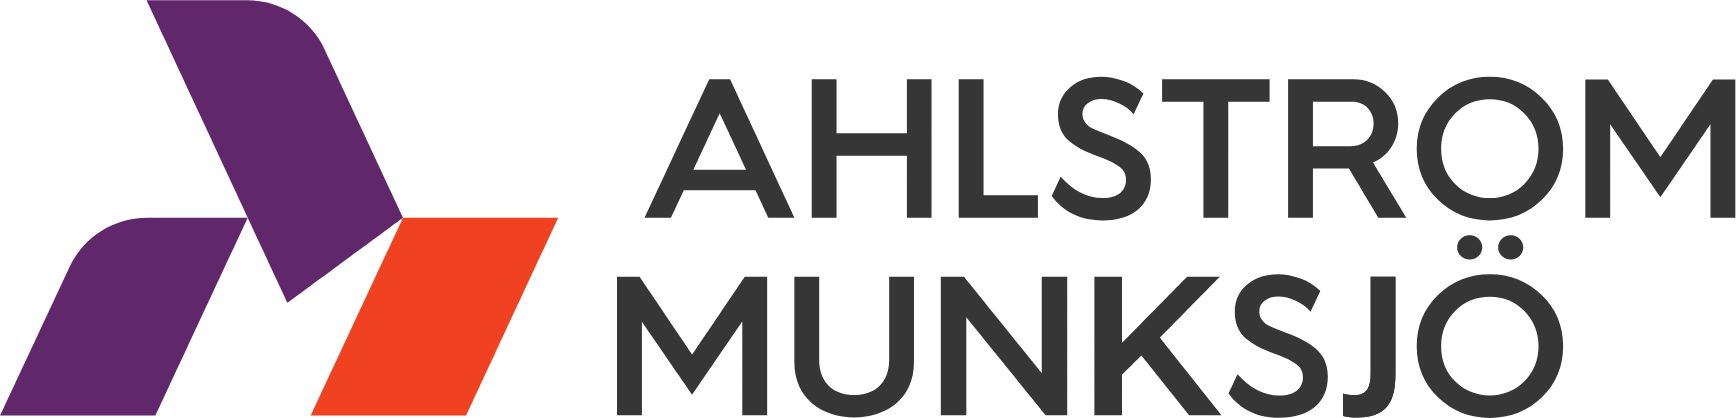 Ahlstrom-Munksjö
 logo large (transparent PNG)